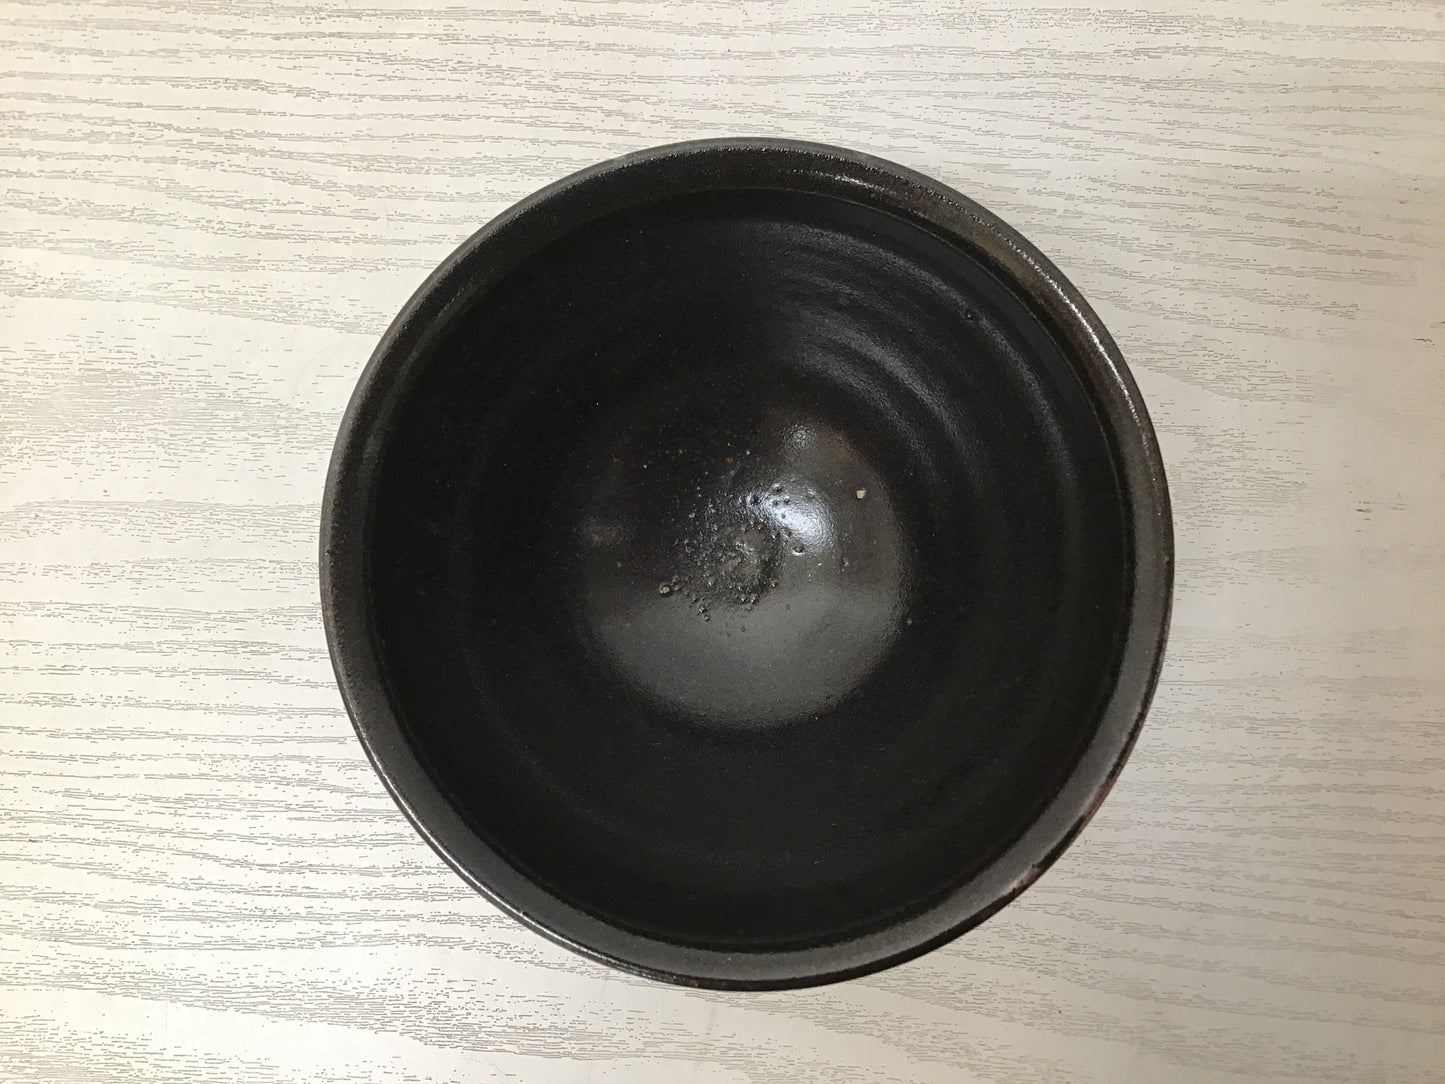 Y1680 CHAWAN Tenmoku signed box Japanese bowl pottery Japan tea ceremony